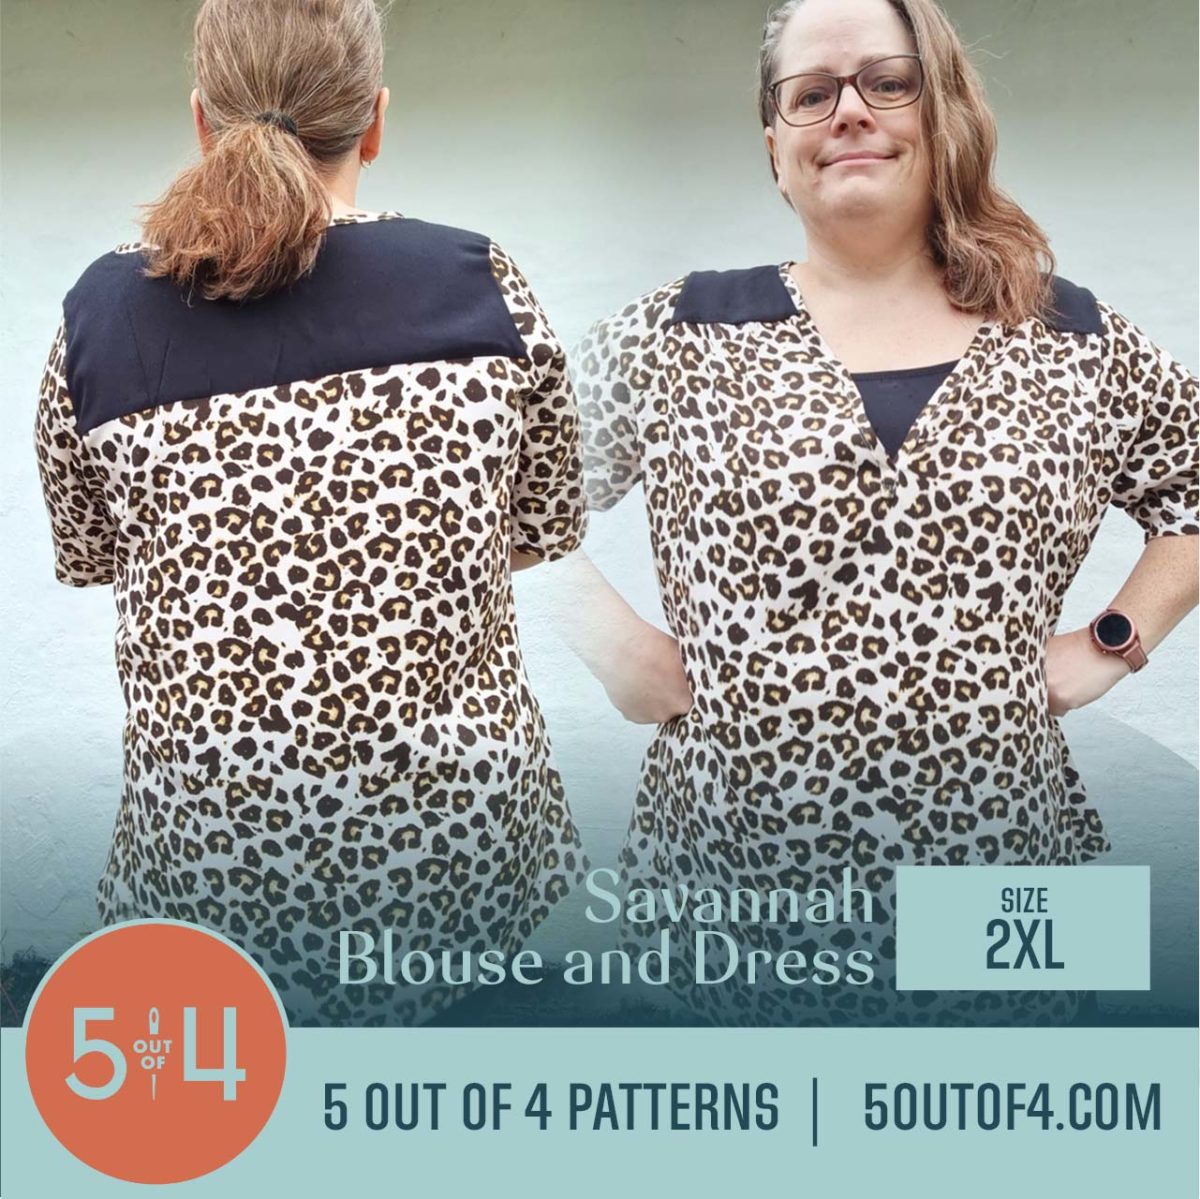 5oo4 Patterns Savannah blouse size 2XL